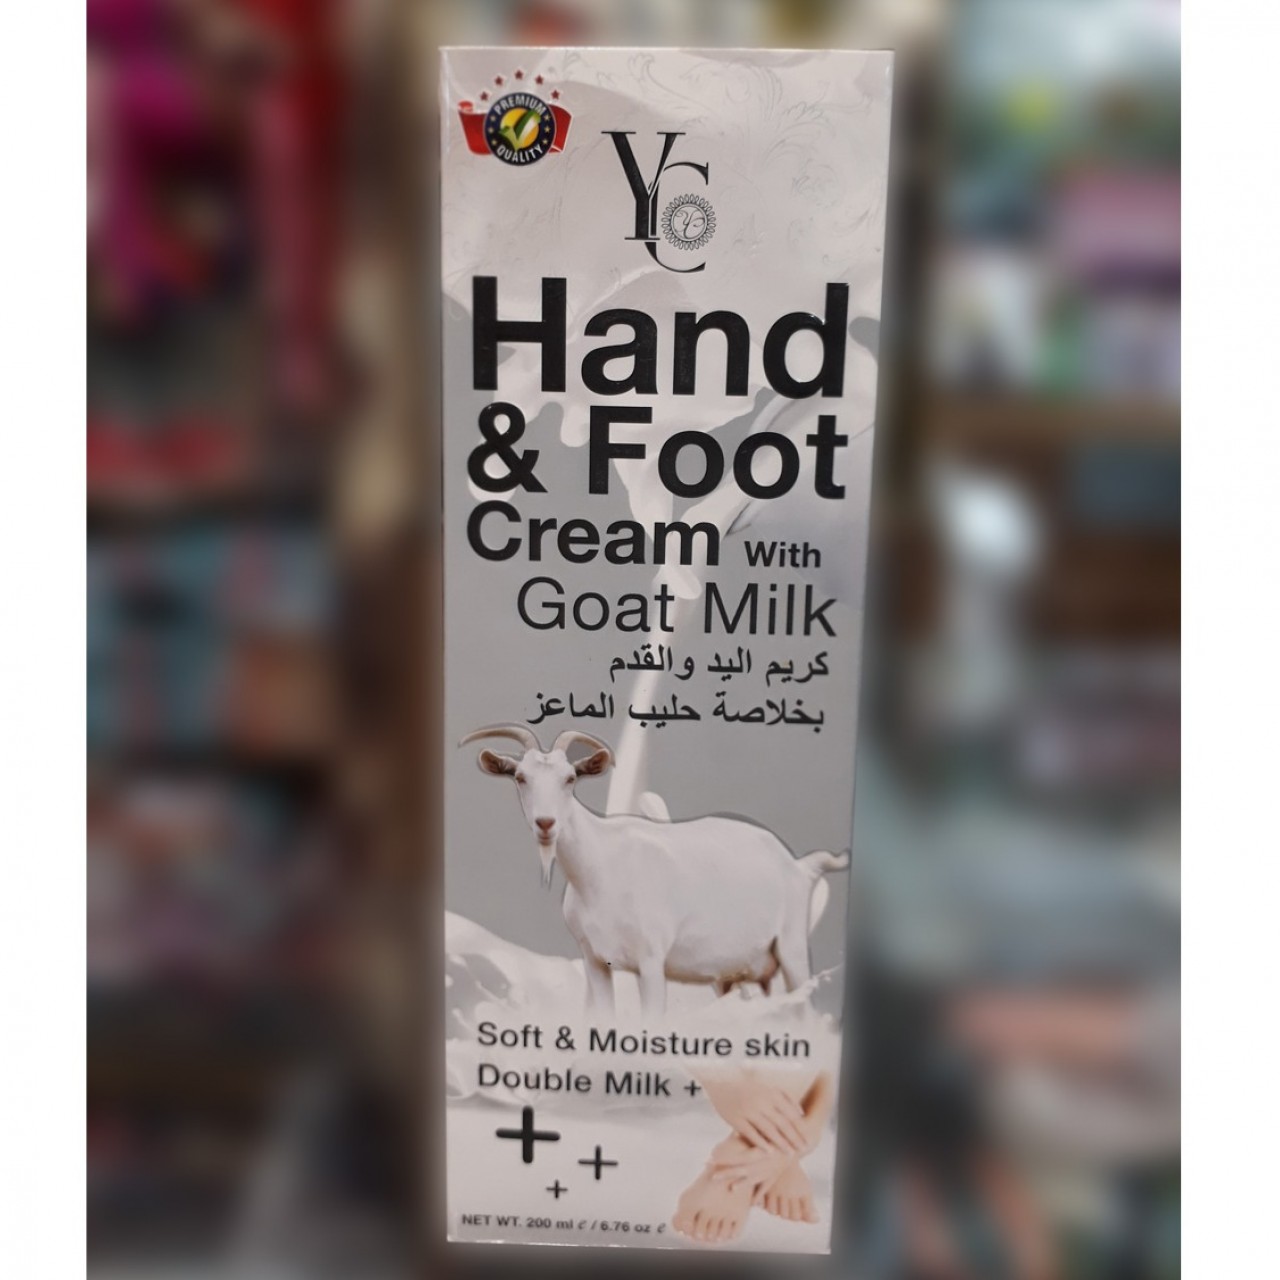 YC Hand & Foot Cream With Goat Milk - Soft & Moisture Skin - 200 ML - Sale price - Buy online in 